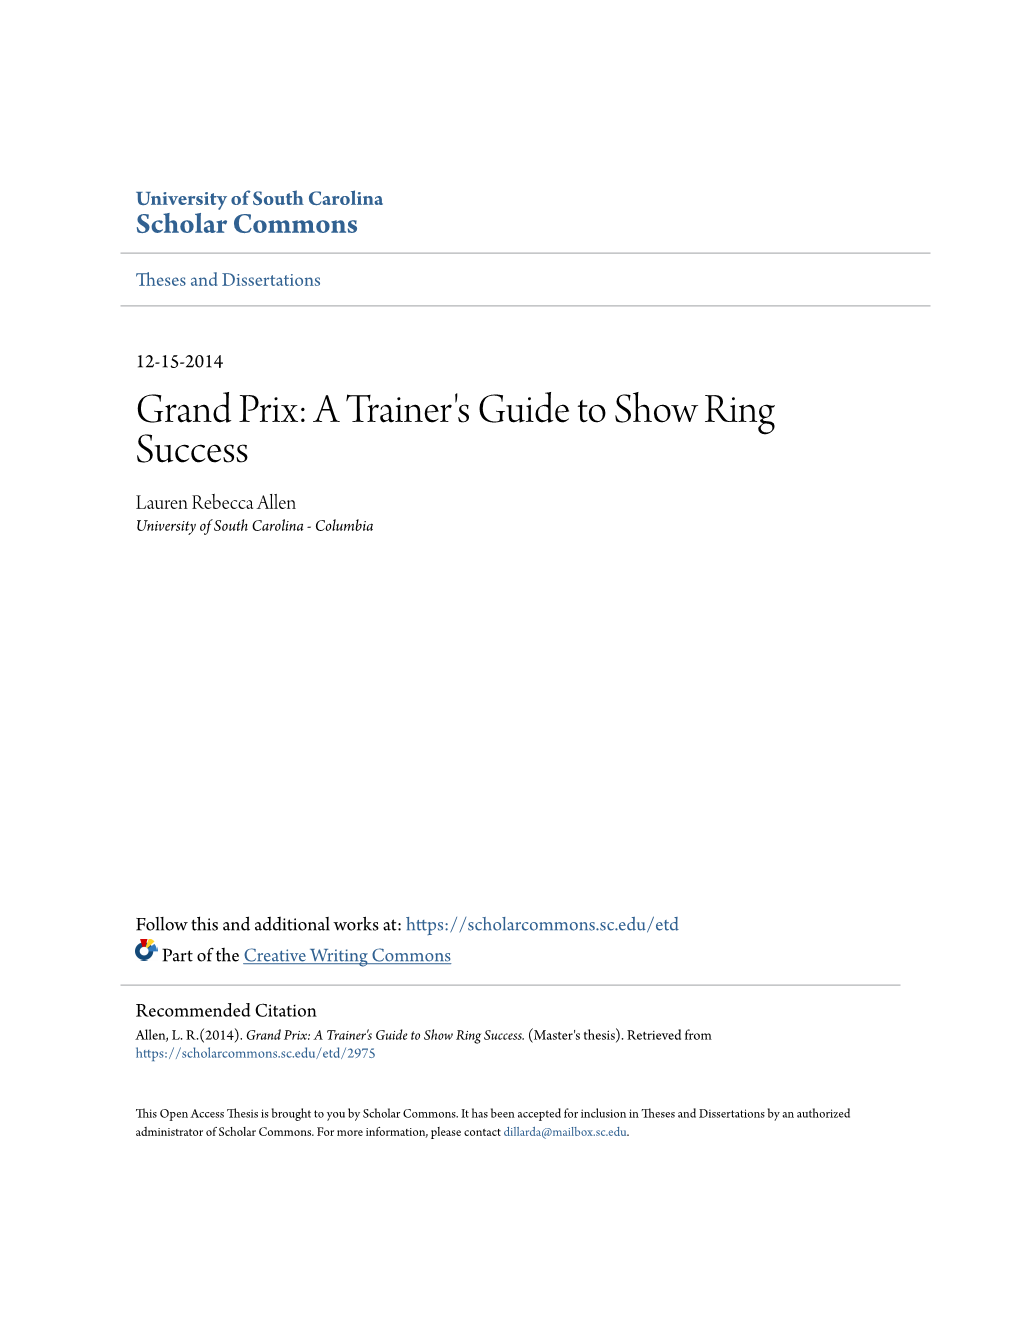 Grand Prix: a Trainer's Guide to Show Ring Success Lauren Rebecca Allen University of South Carolina - Columbia